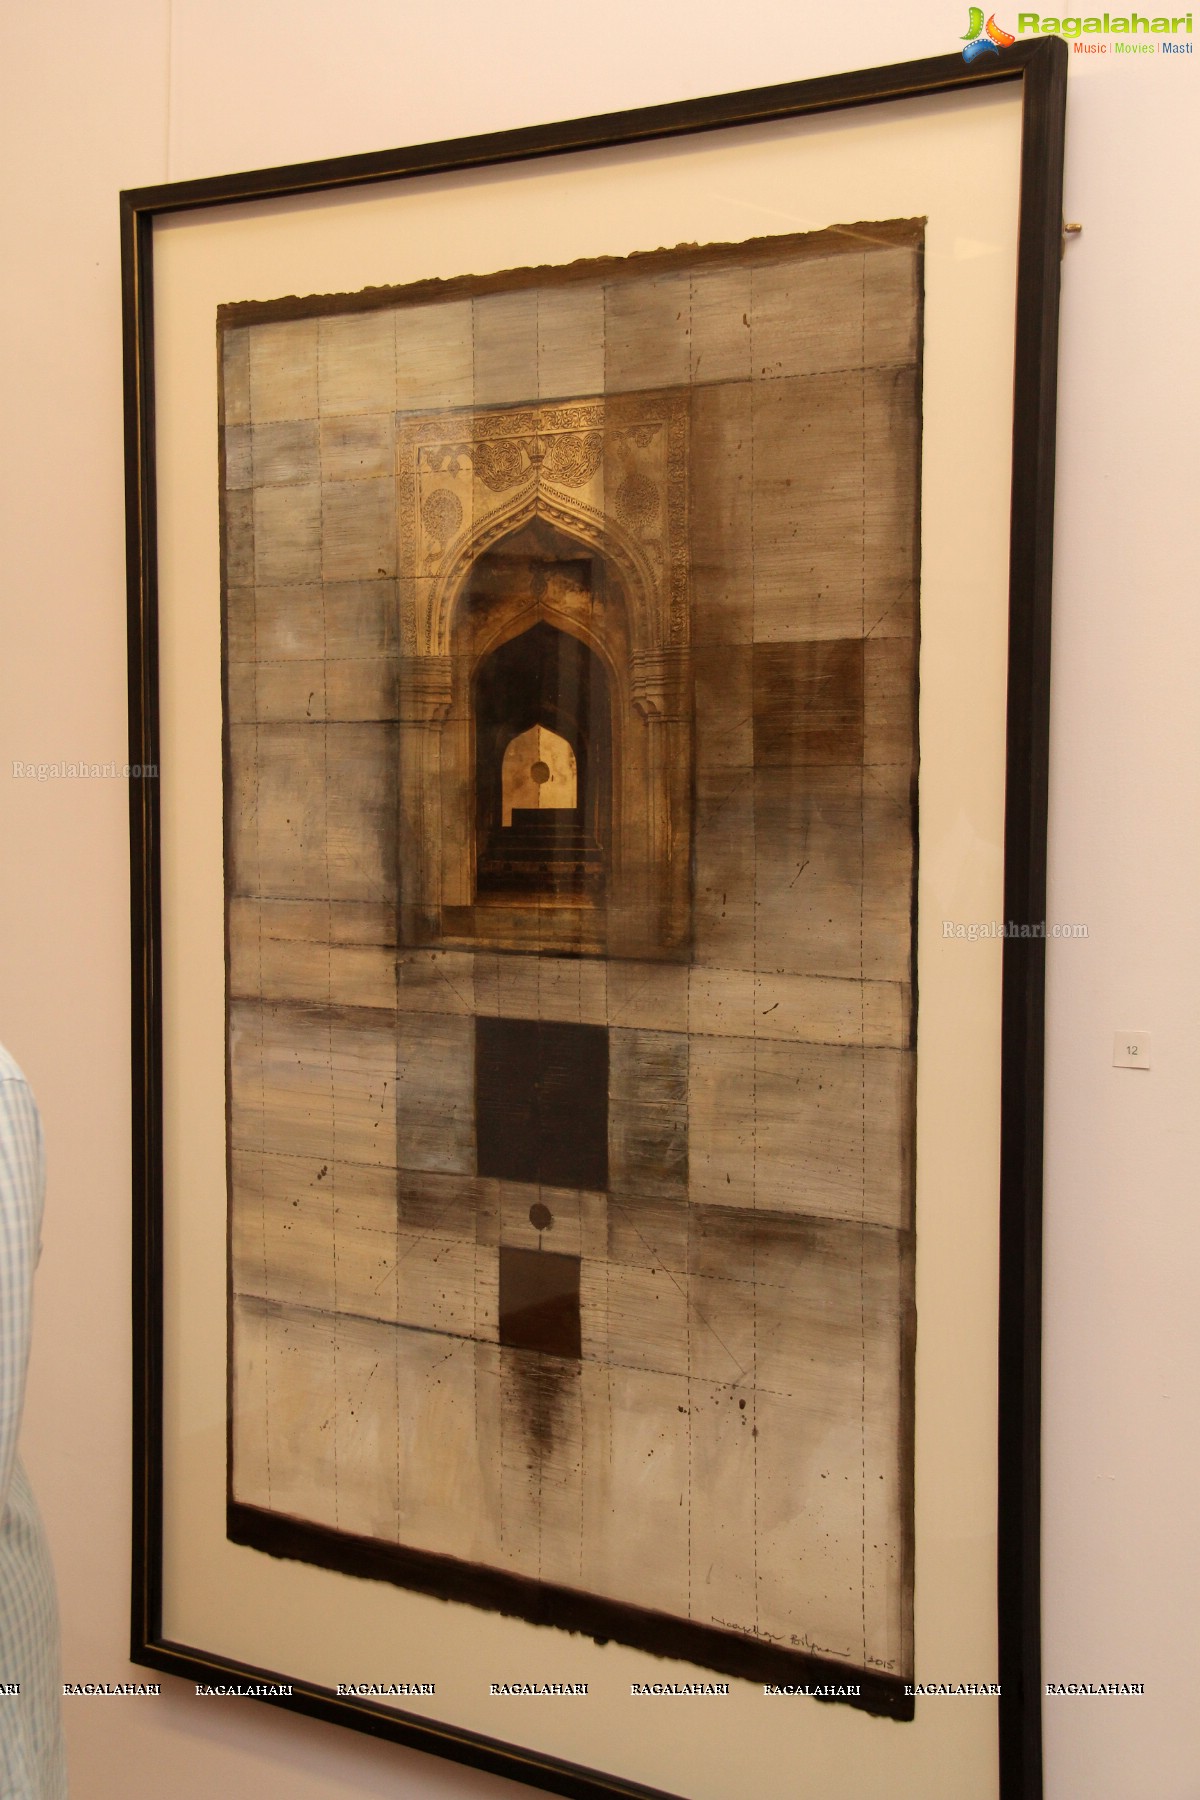 Noorjehan Bilgrami Art Exhibition at Kalakriti Art Gallery, Hyderabad